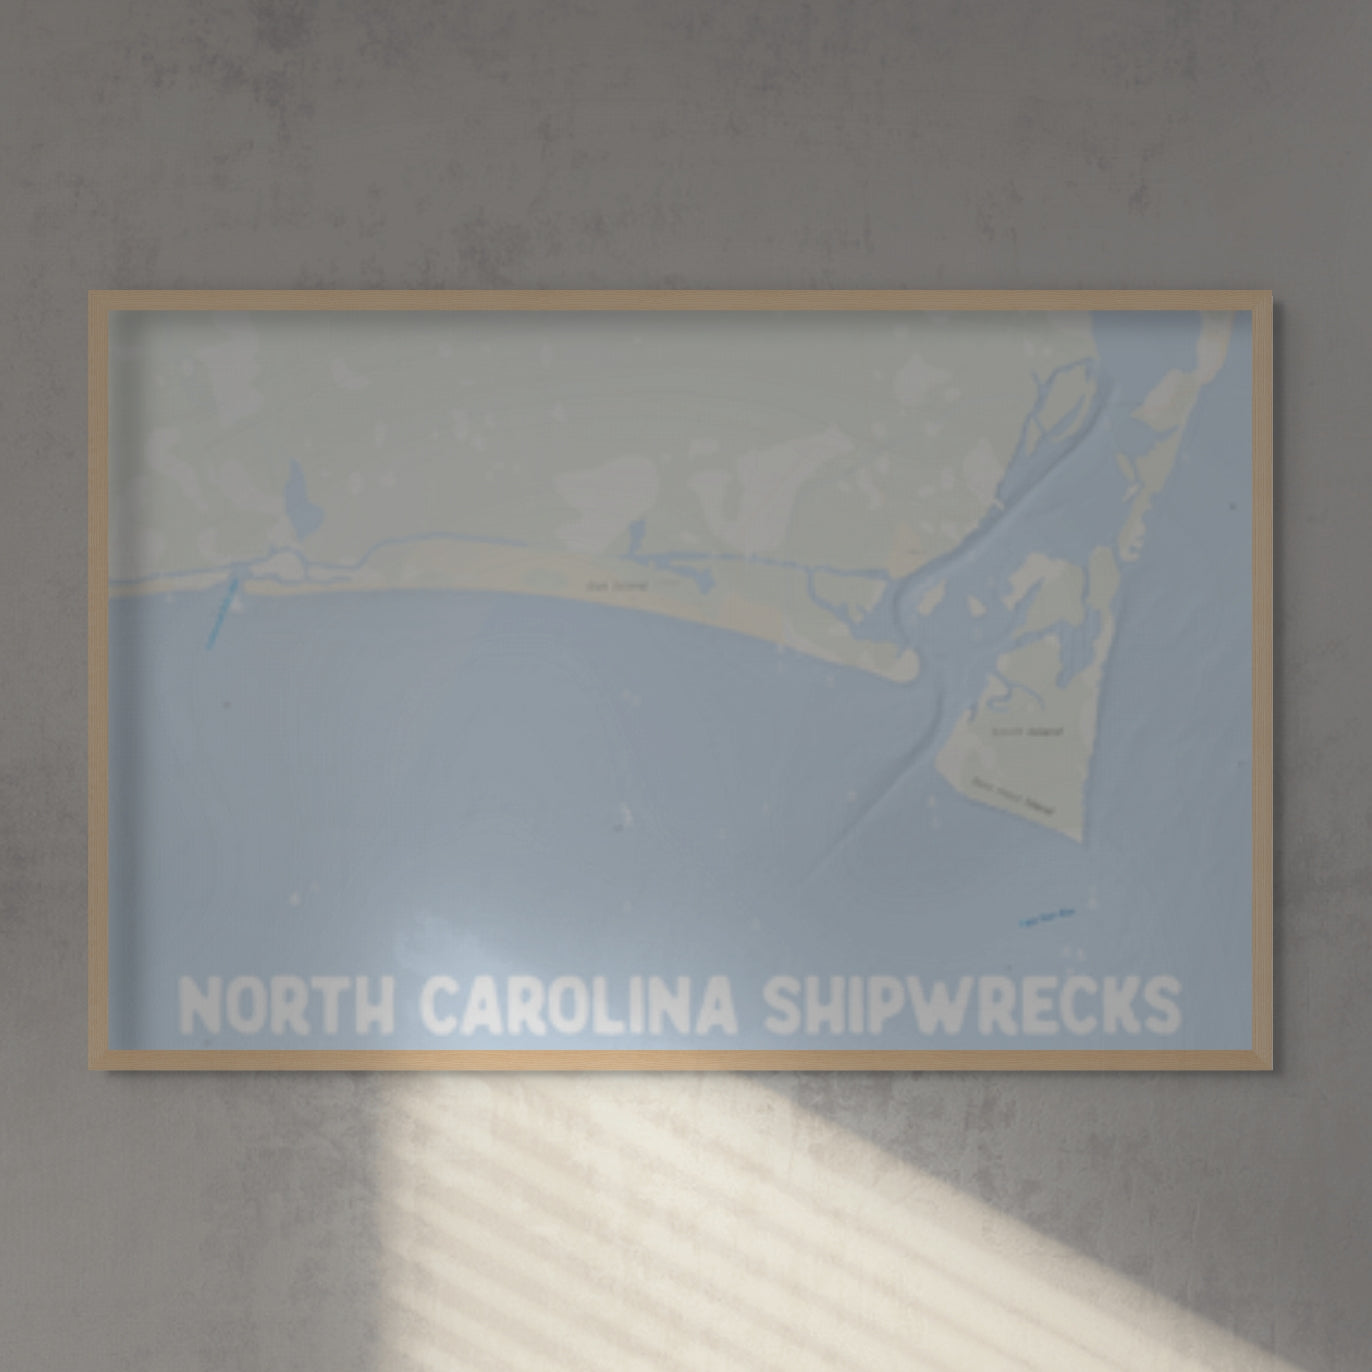 Oak Island North Carolina Shipwrecks Map